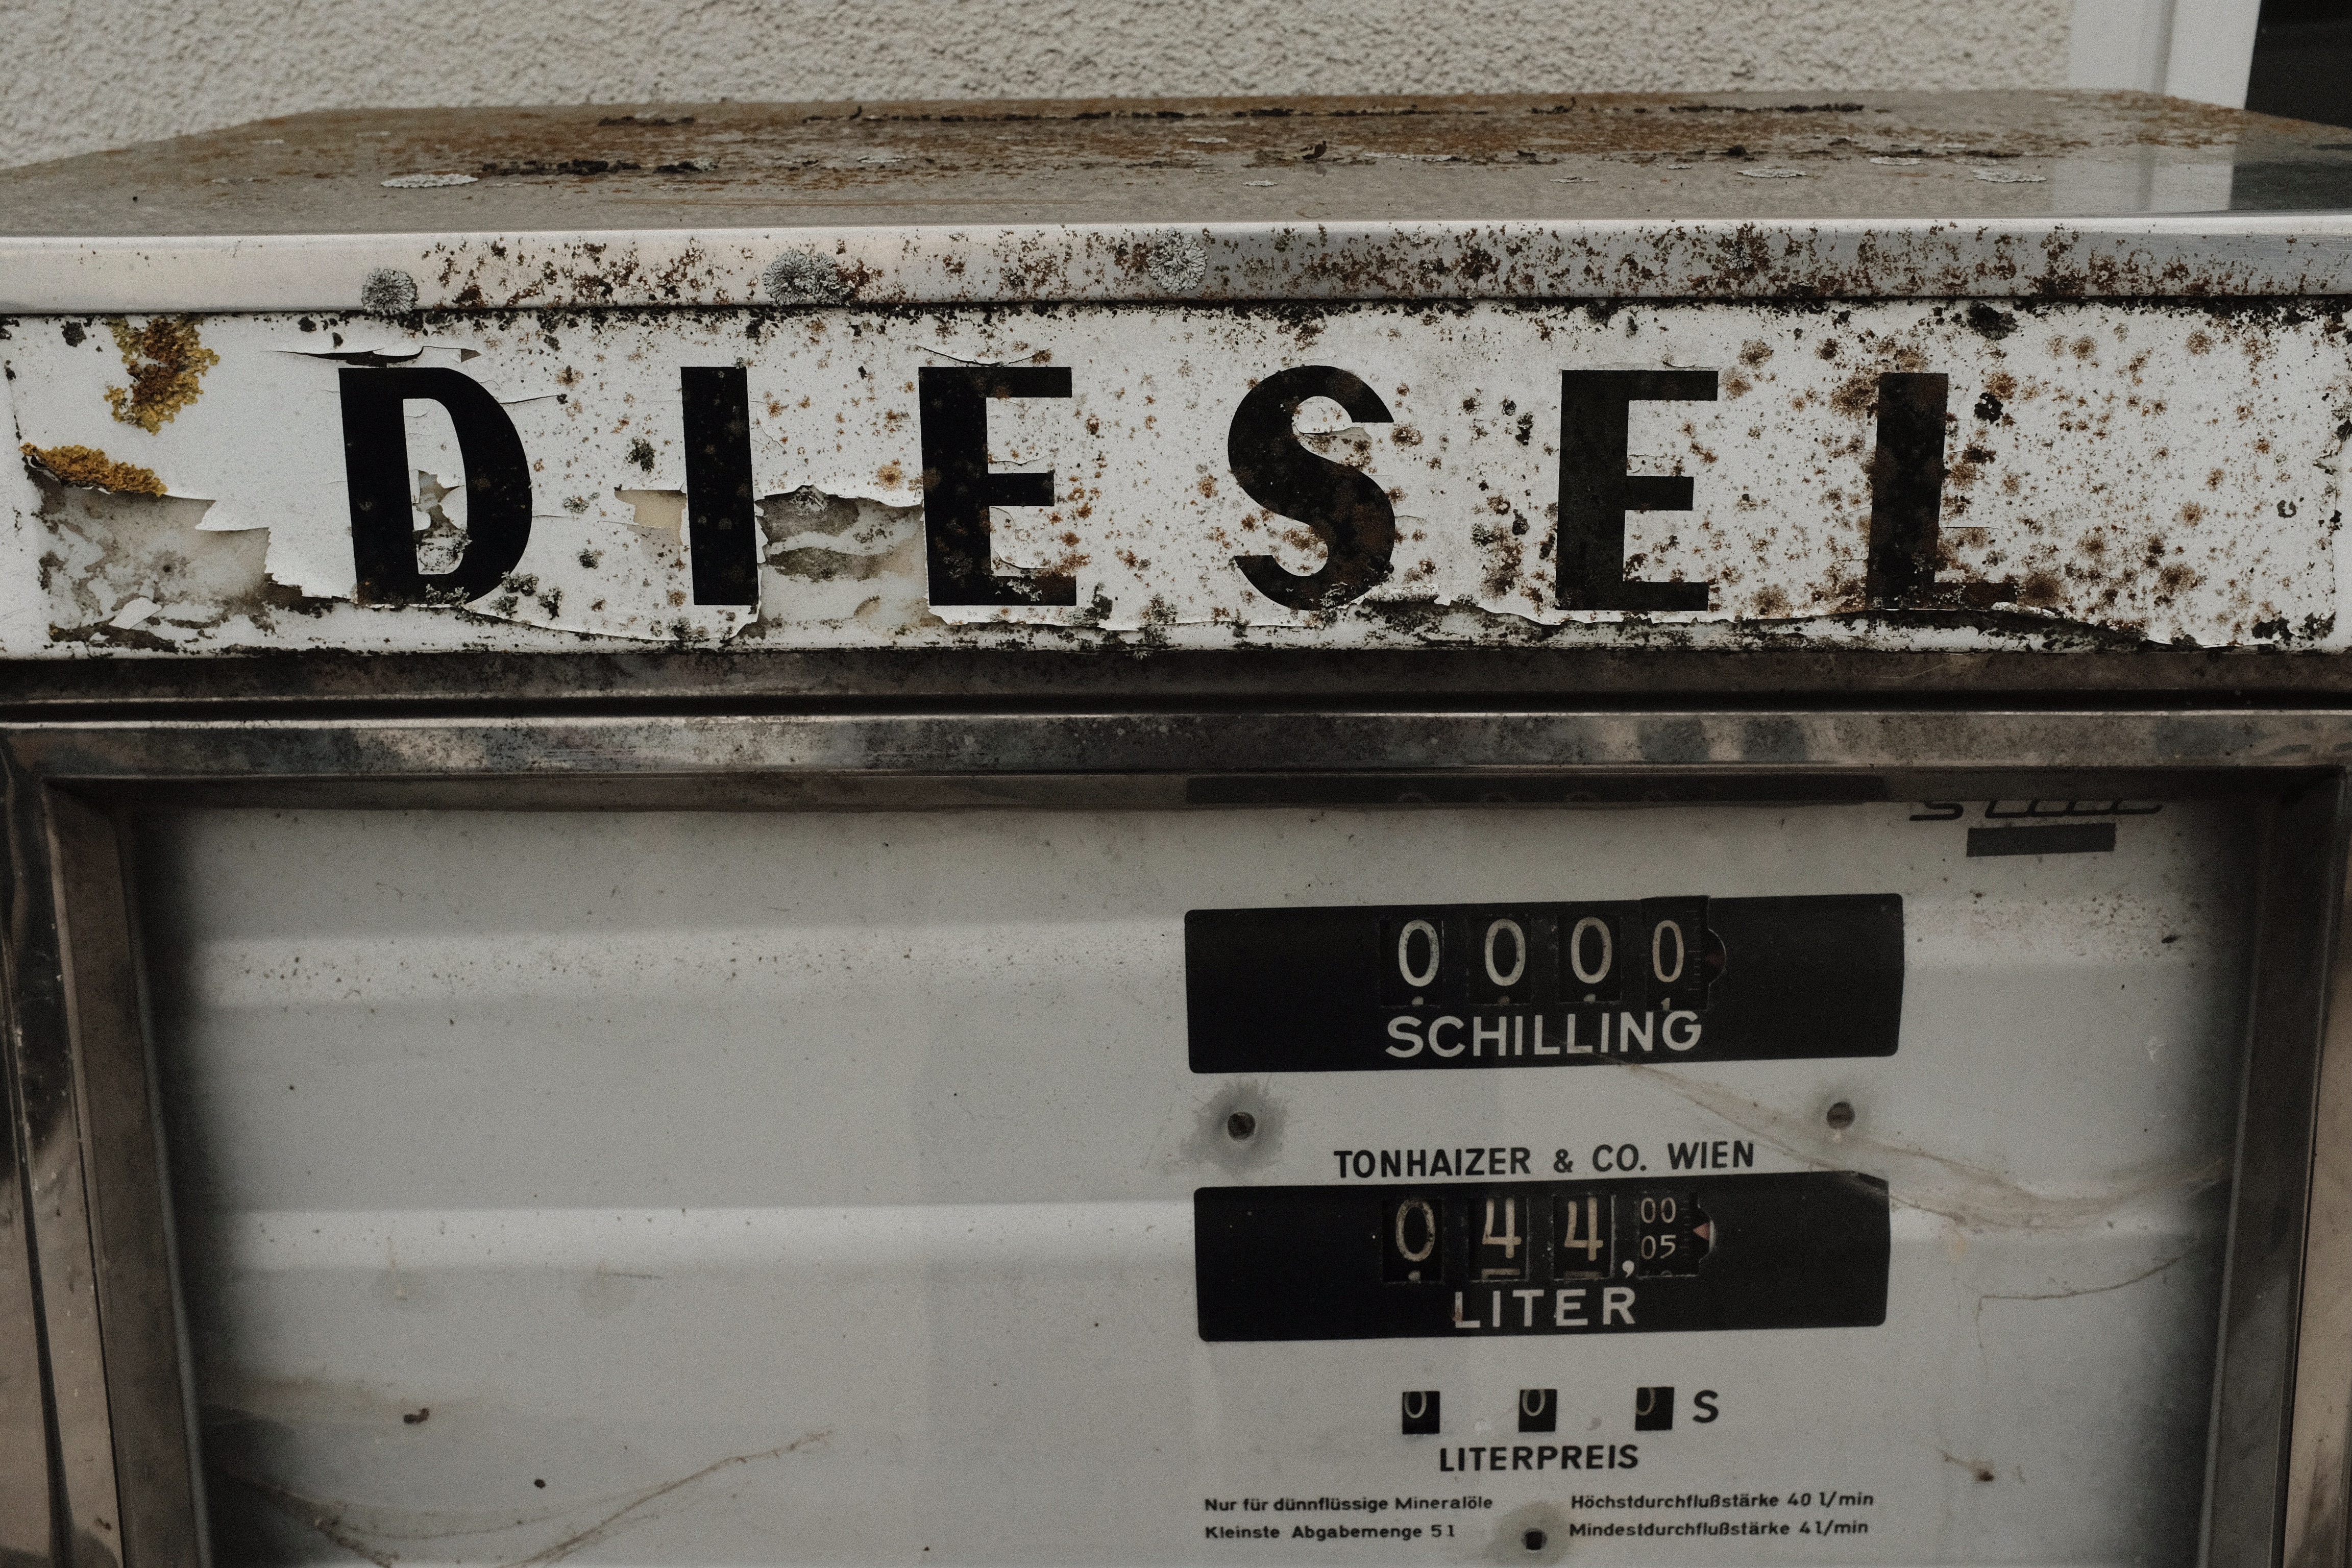 Tips On Preventative Maintenance For Diesel Vehicles